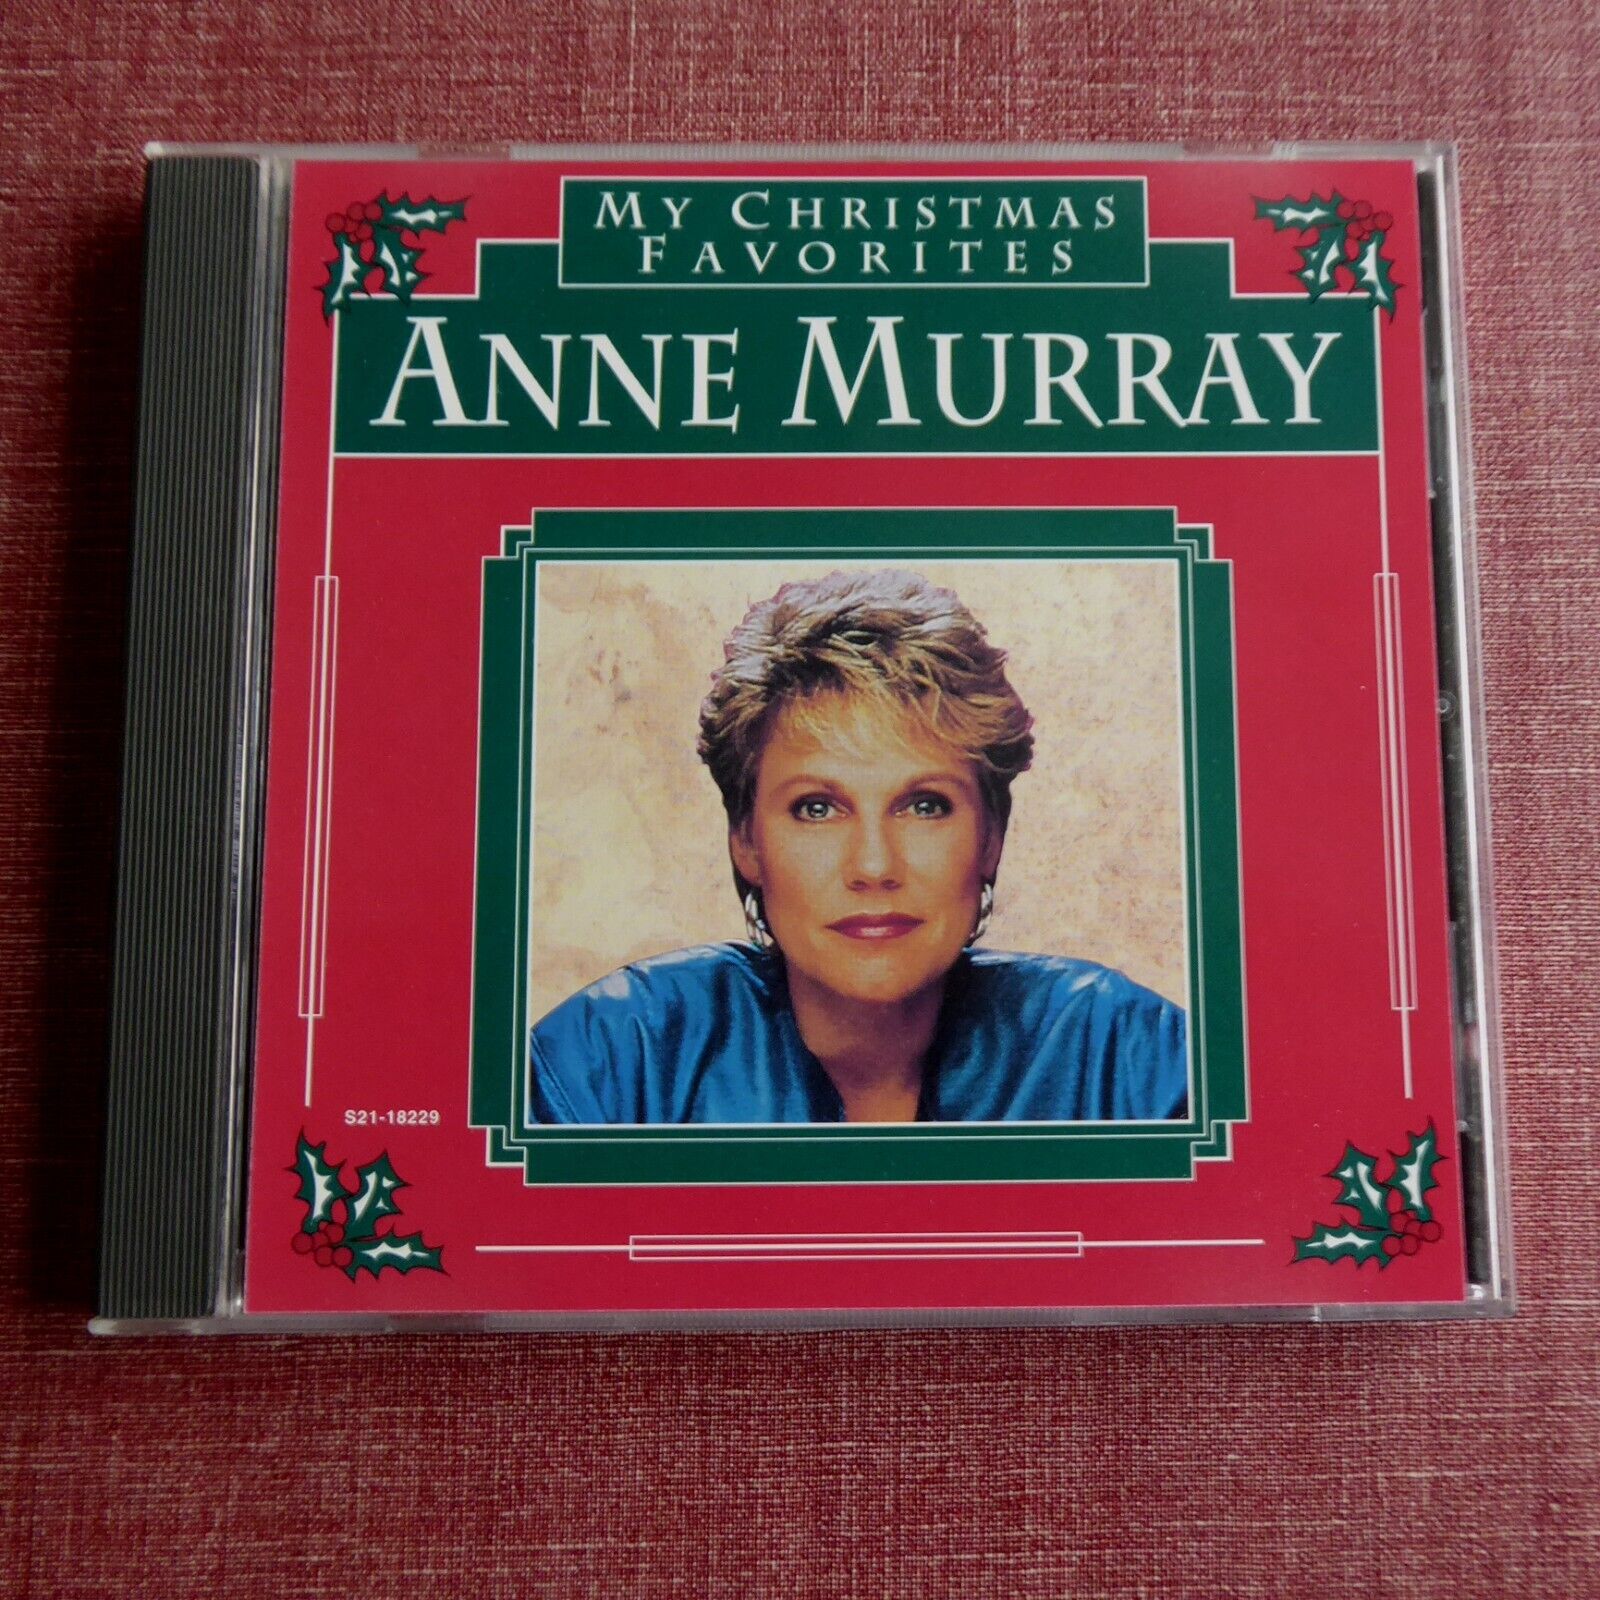 ANNE MURRAY - MY CHRISTMAS FAVOURITES (1995 U.S.A. CD ALBUM)